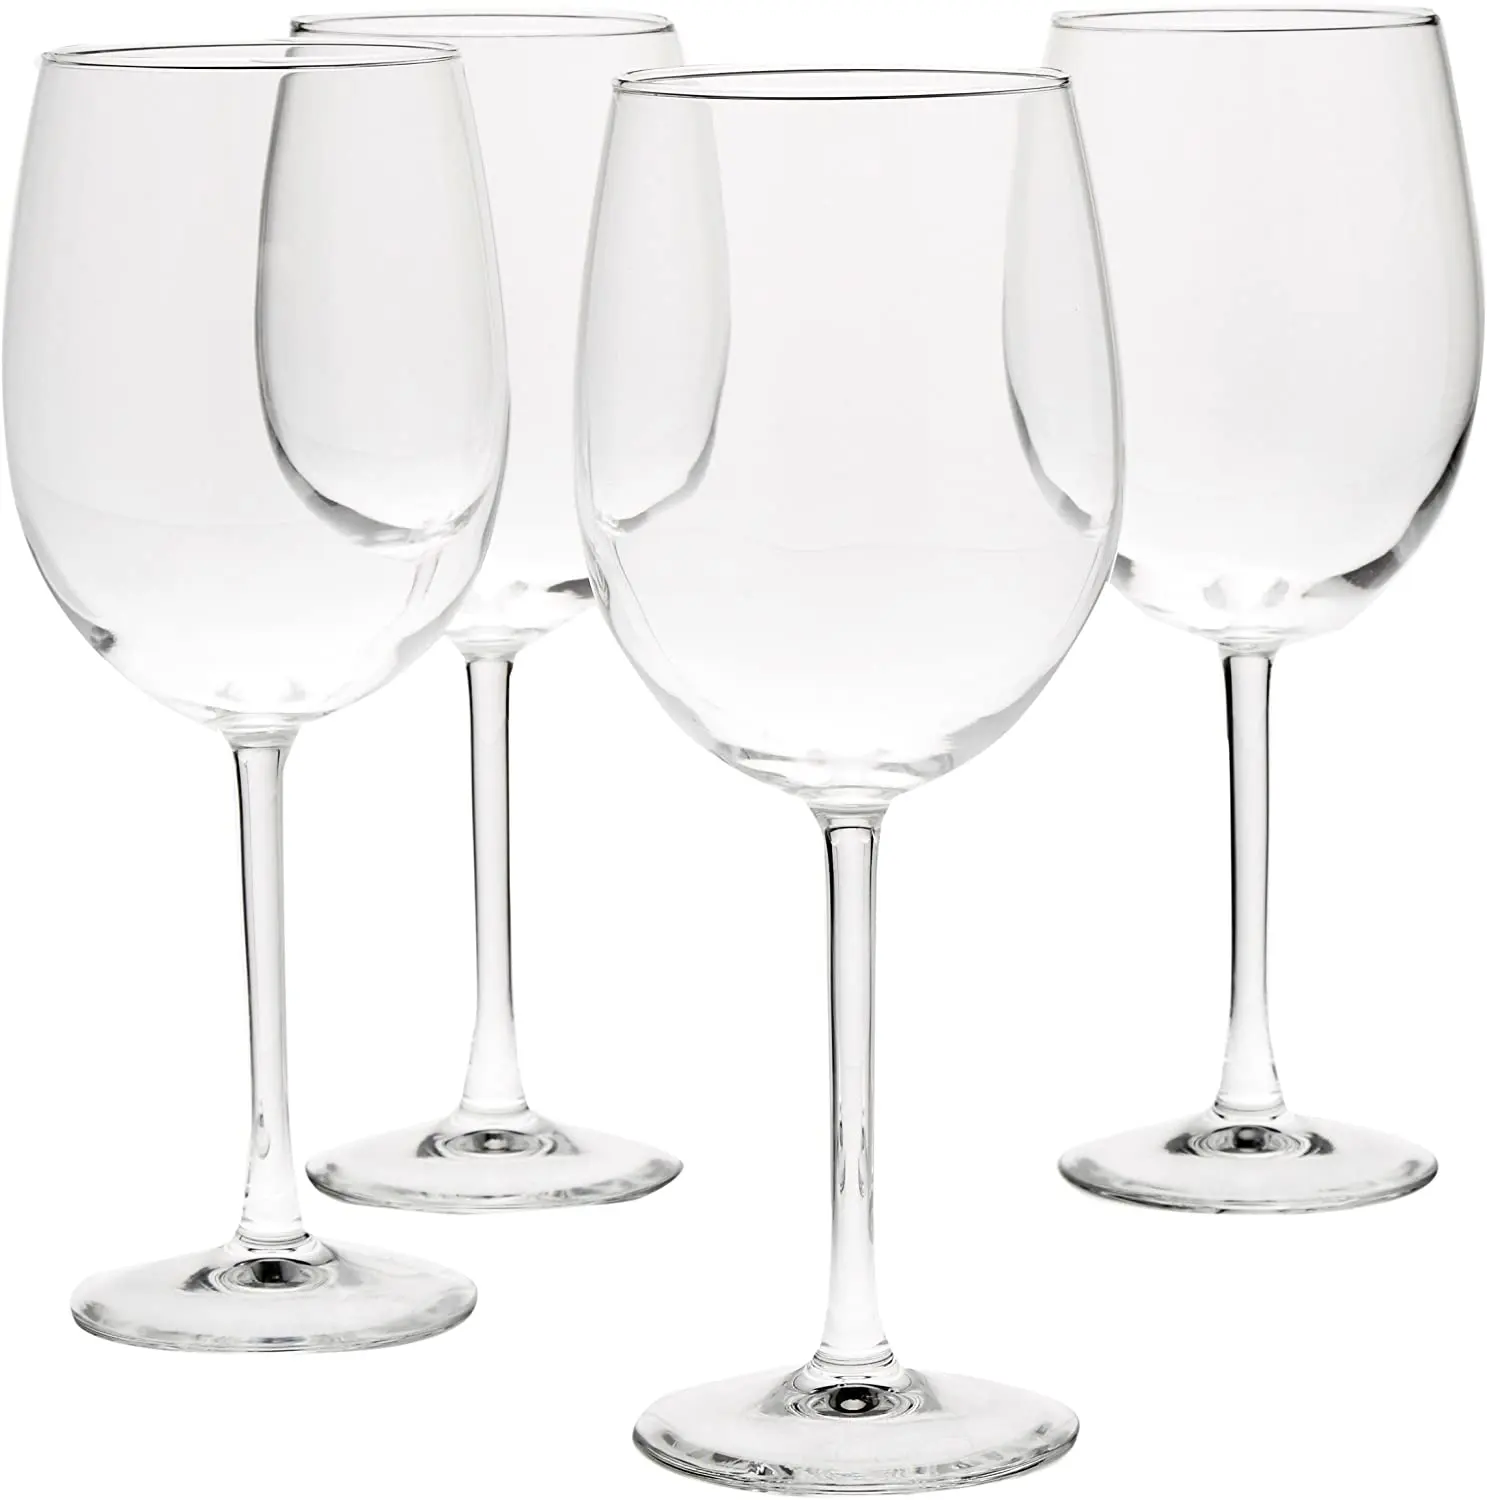 19-3-7 लाल शराब थोक ग्लास goblets के विभिन्न क्लासिक मॉडल फैक्टरी प्रत्यक्ष बिक्री